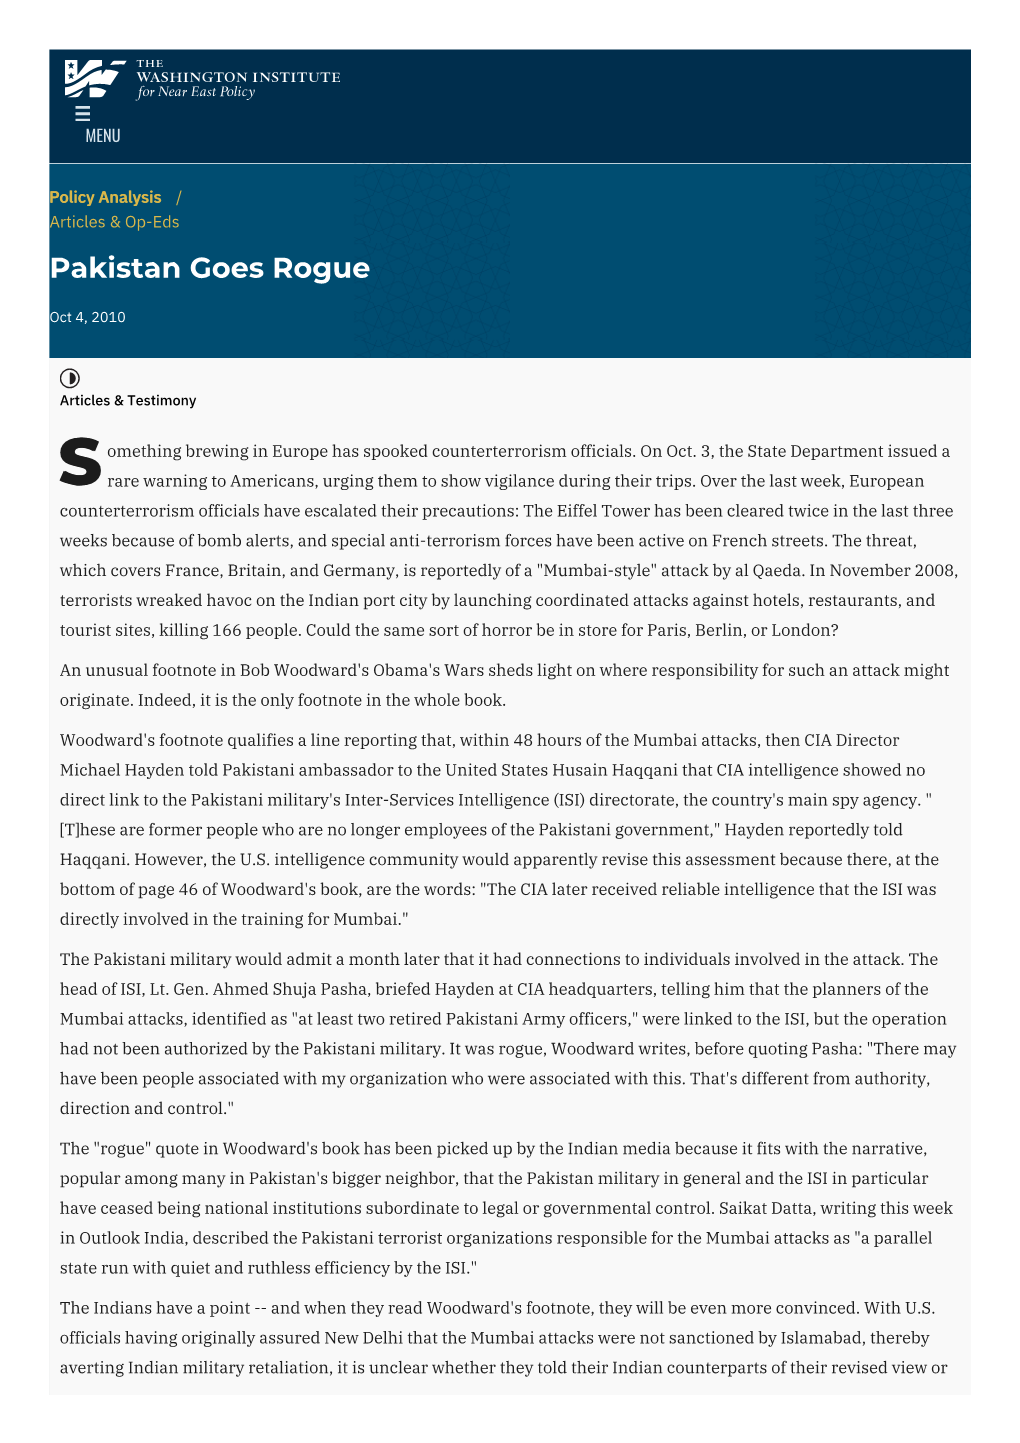 Pakistan Goes Rogue | the Washington Institute